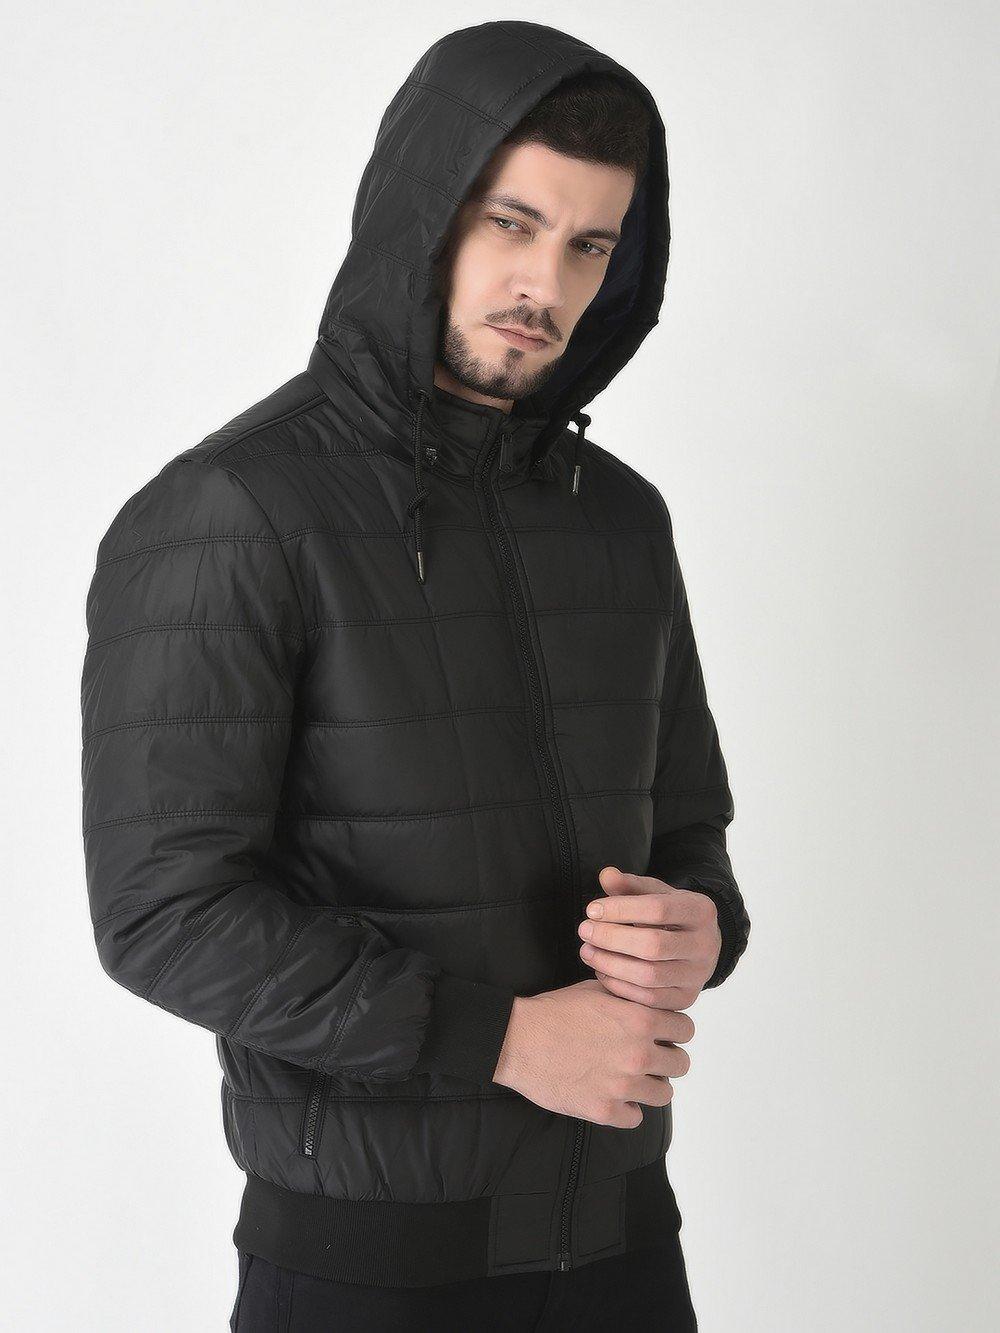 Buy Duke Men Full Sleeve Jacket_WSDZ834_Black_M at Amazon.in